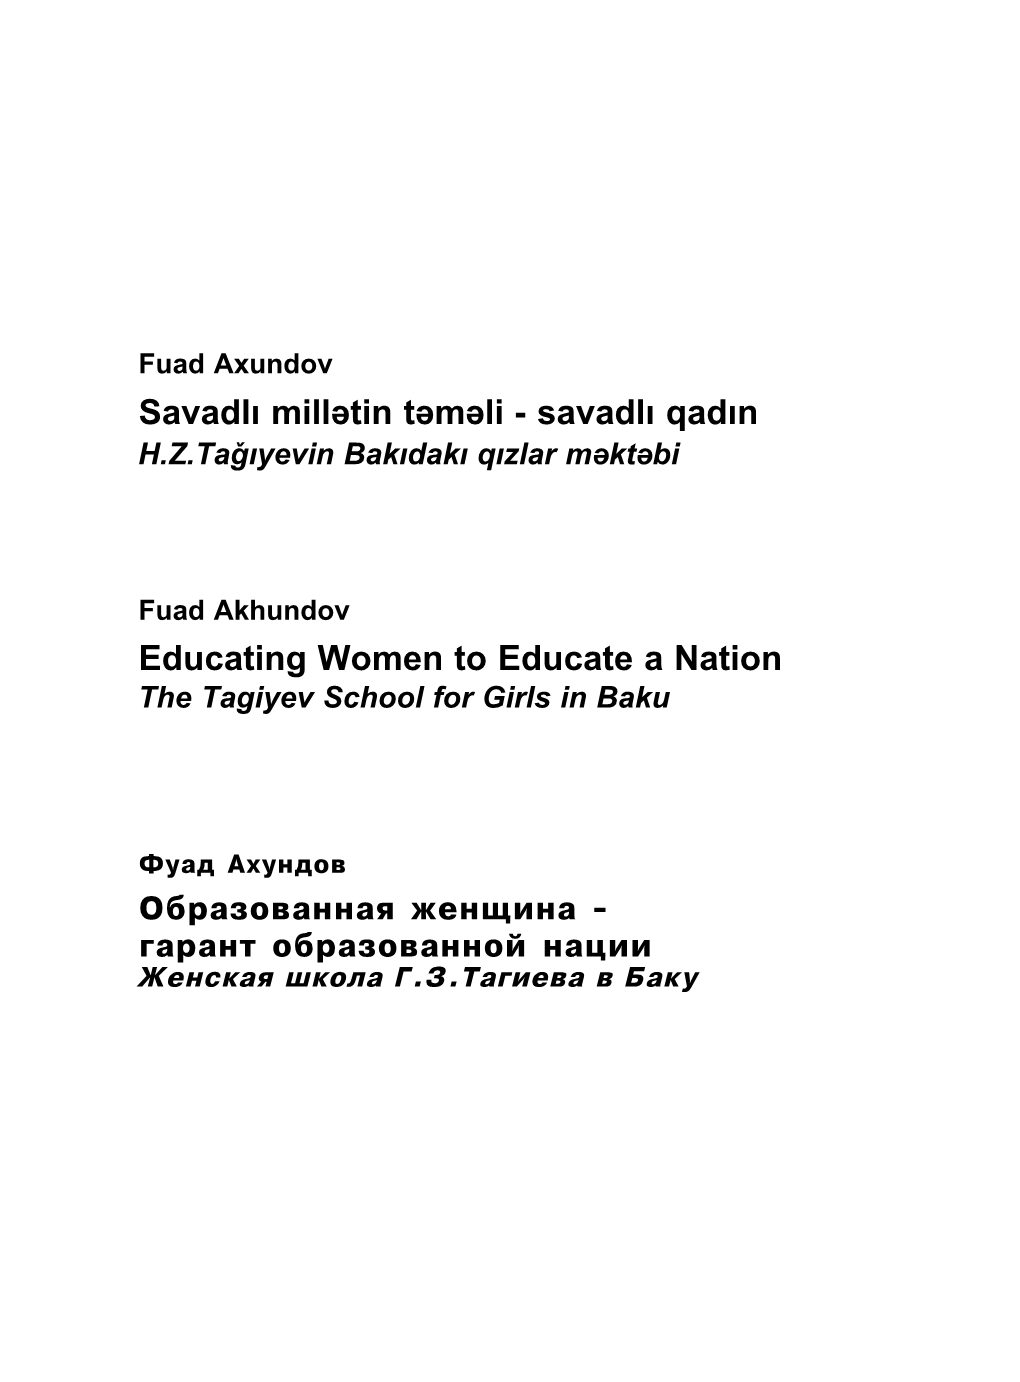 Савадлы Гадын Educating Women to Educate a Nation Образован